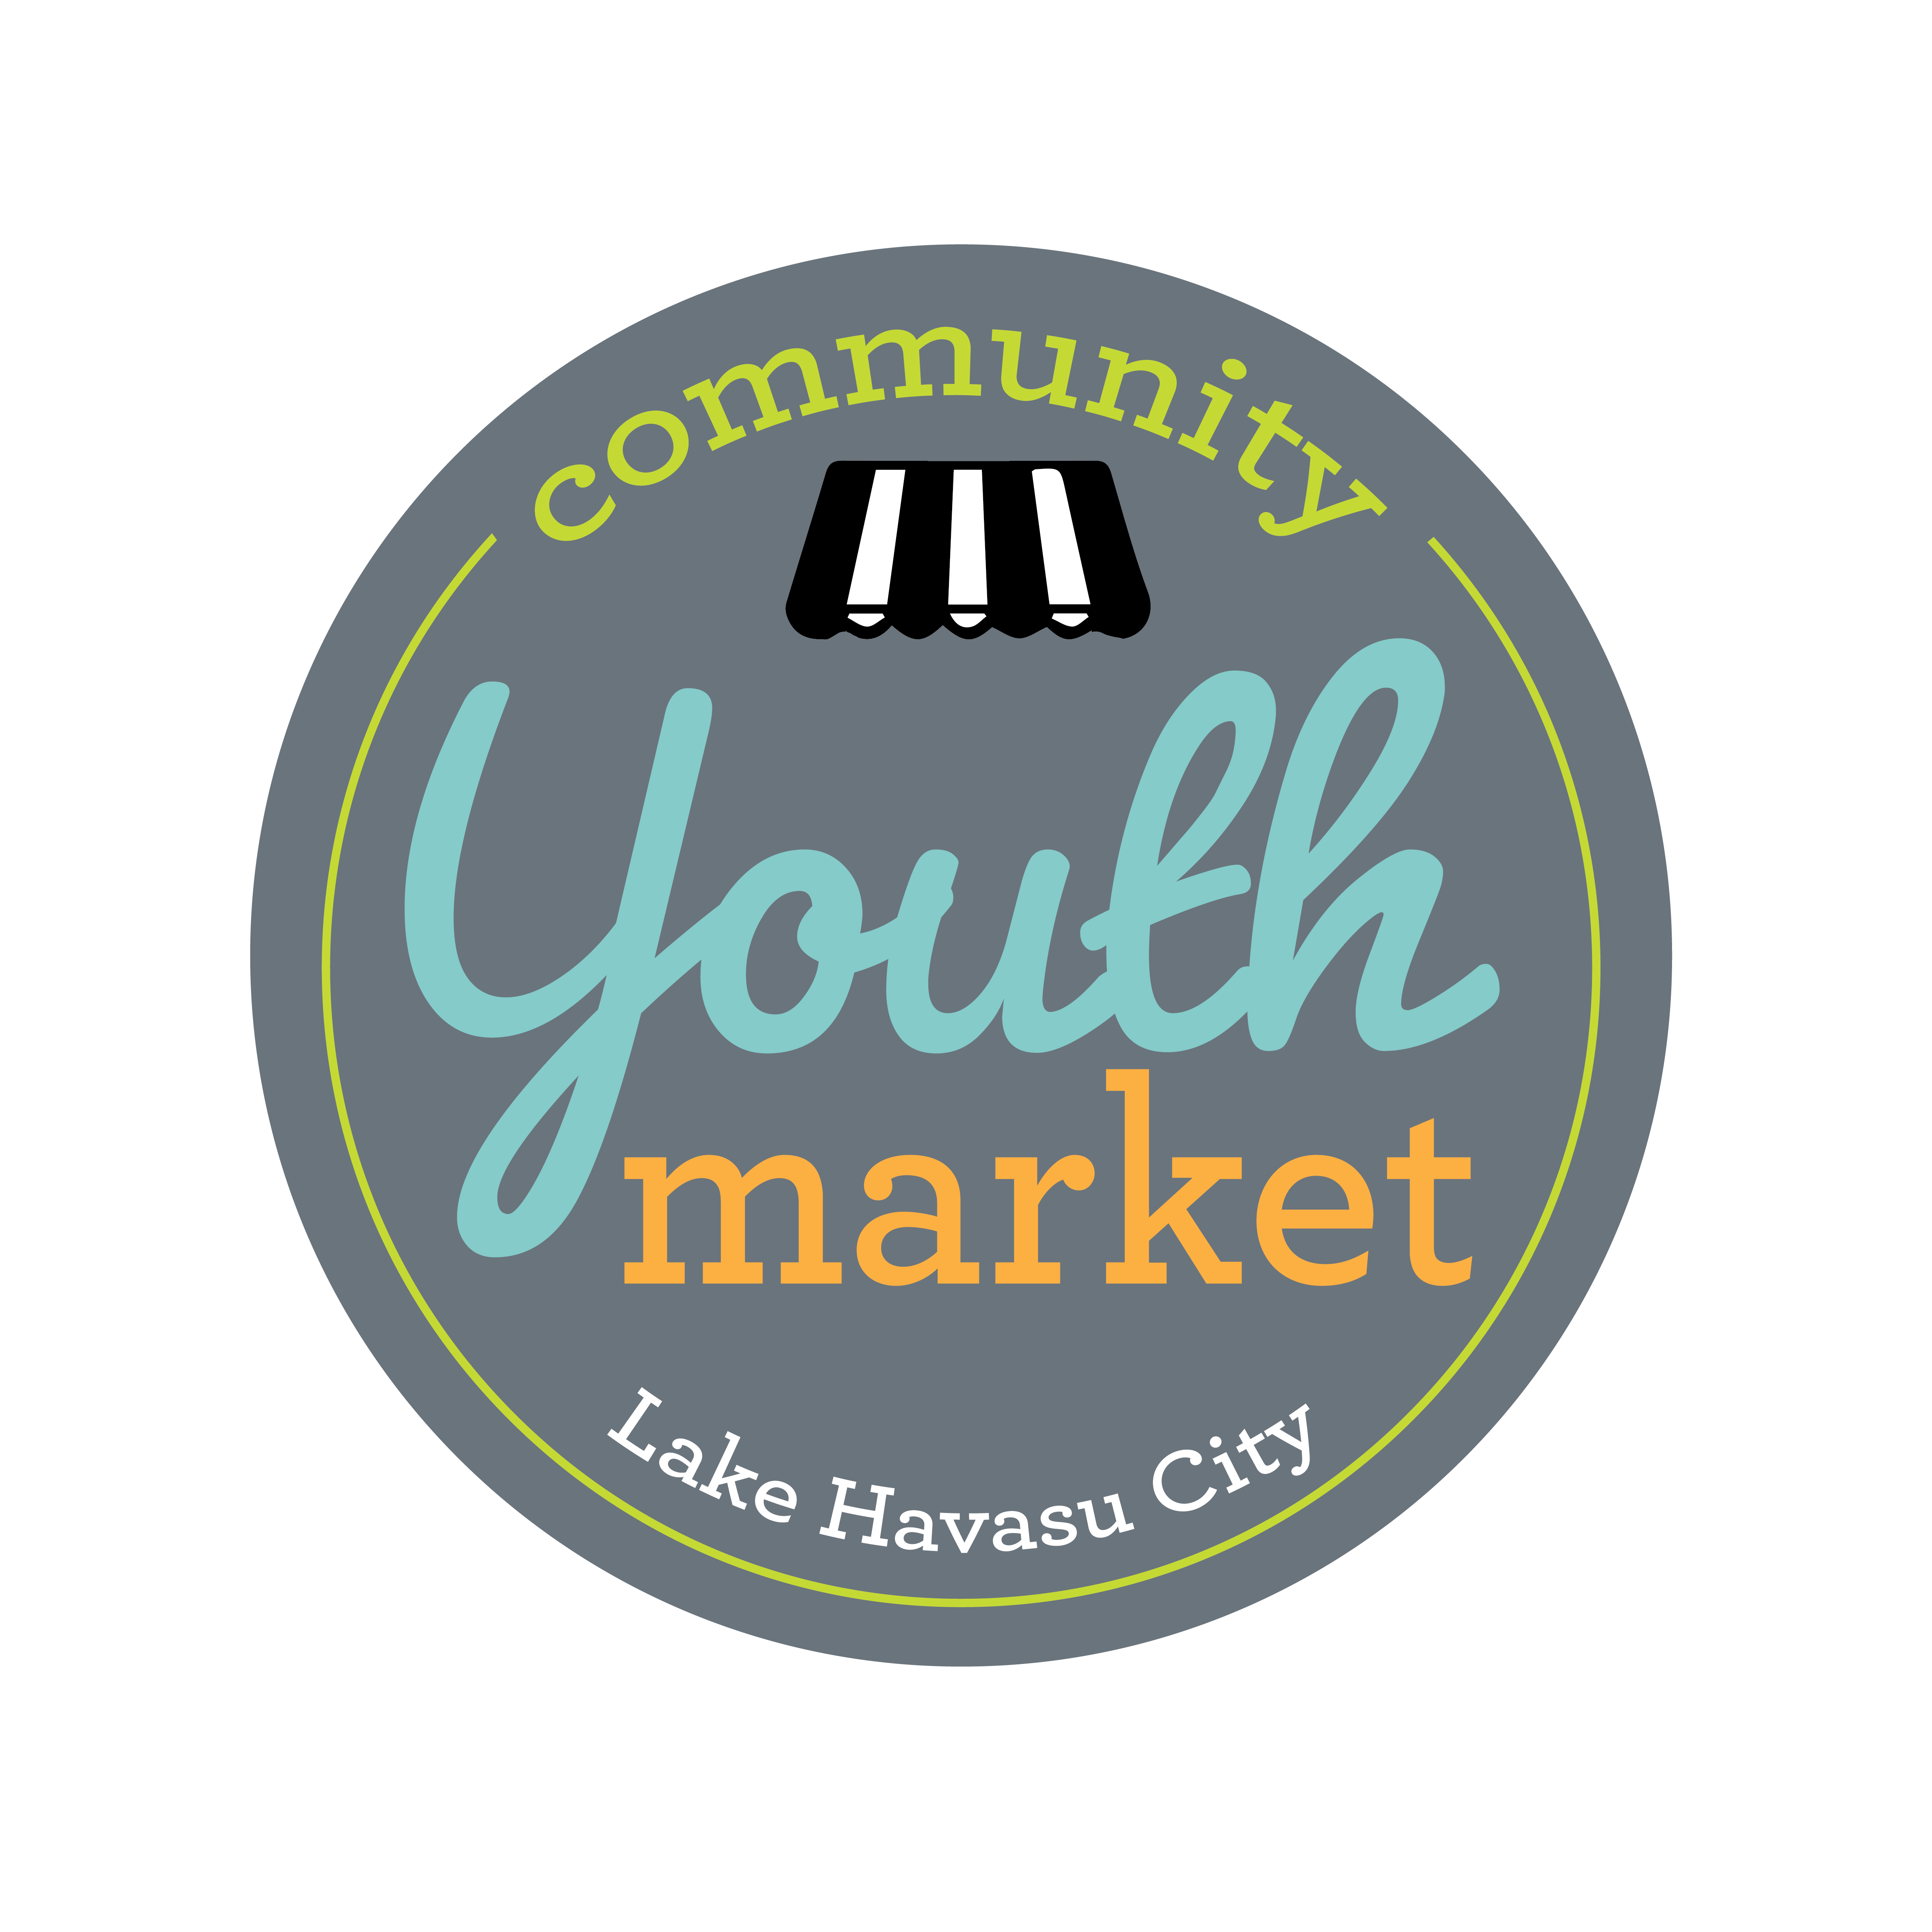 Community Youth Market